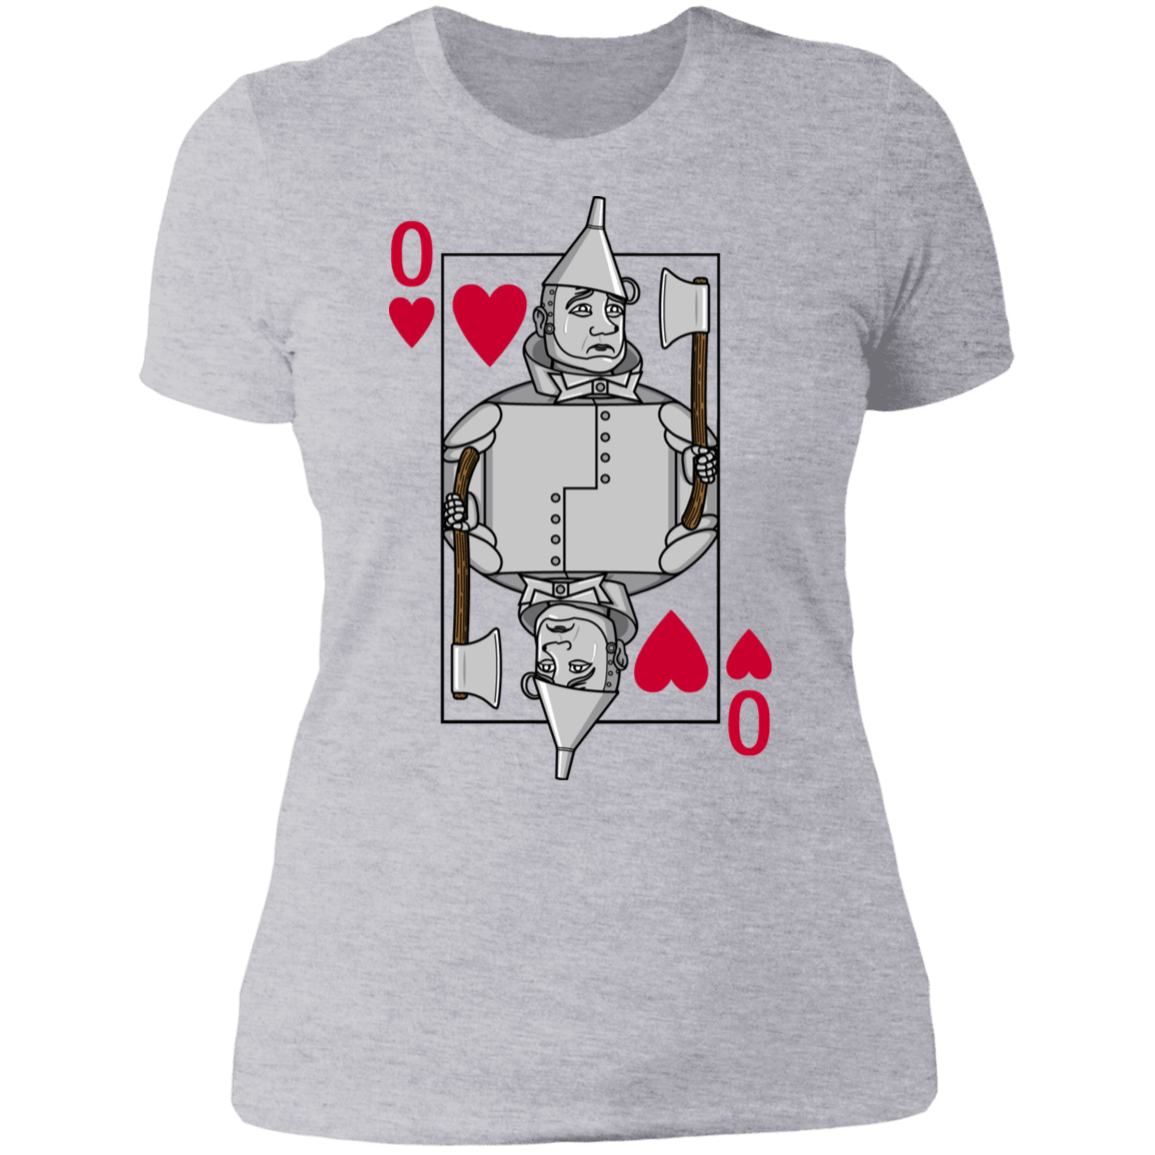 T-Shirts Heather Grey / S 0 Of Hearts Women's Premium T-Shirt